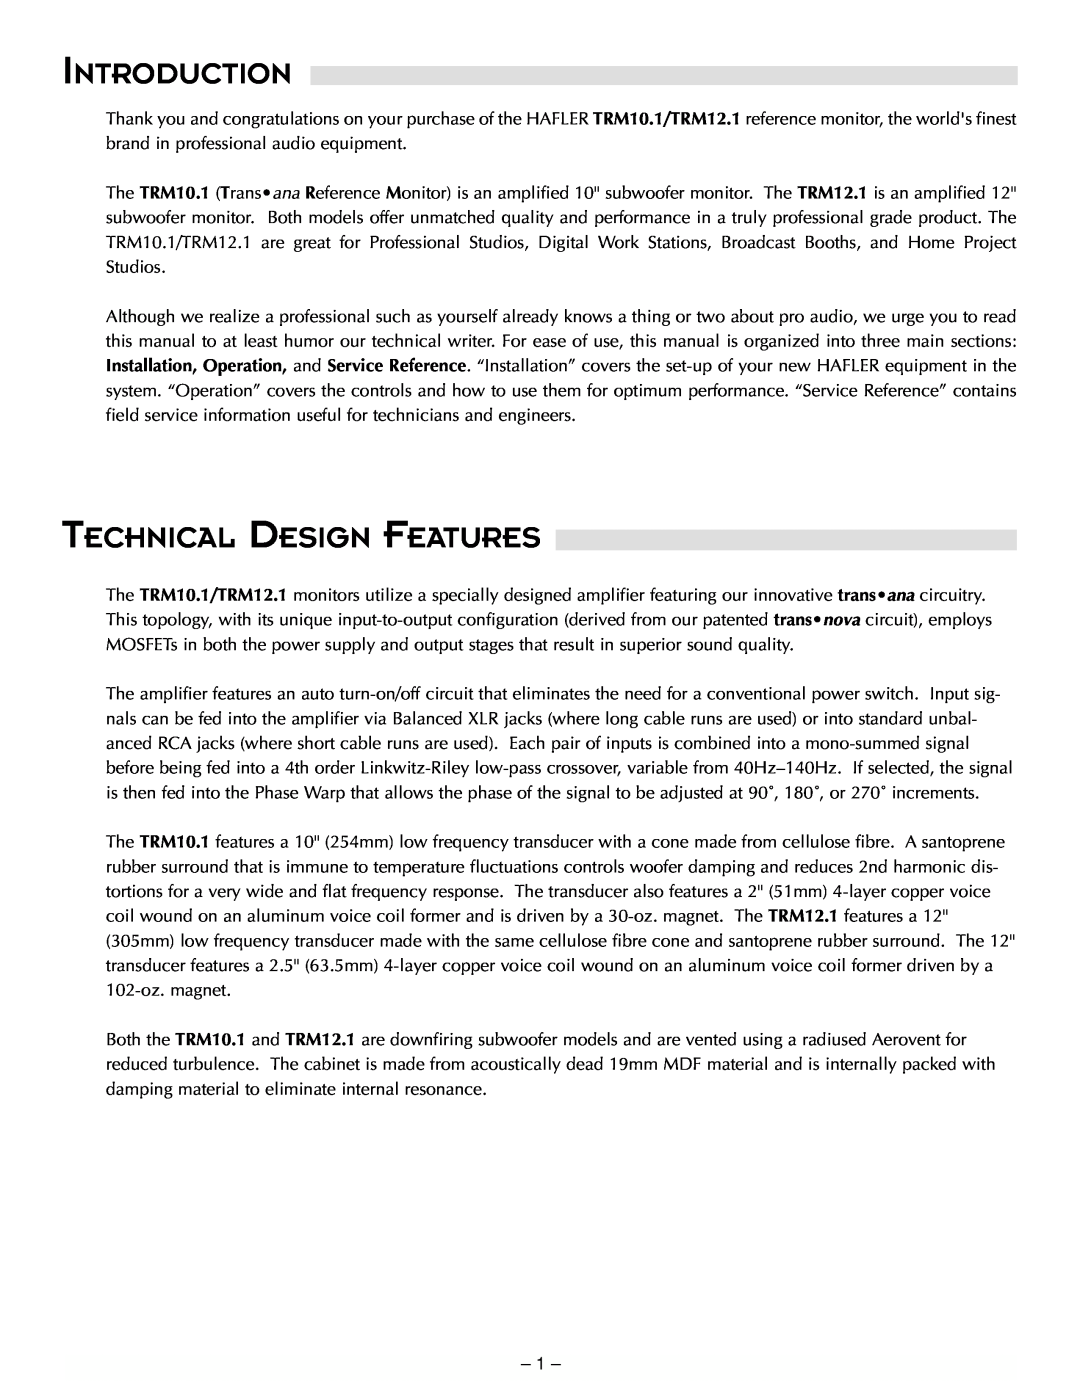 Hafler TRM10.1, TRM12.1 manual Introduction, Technical Design Features 